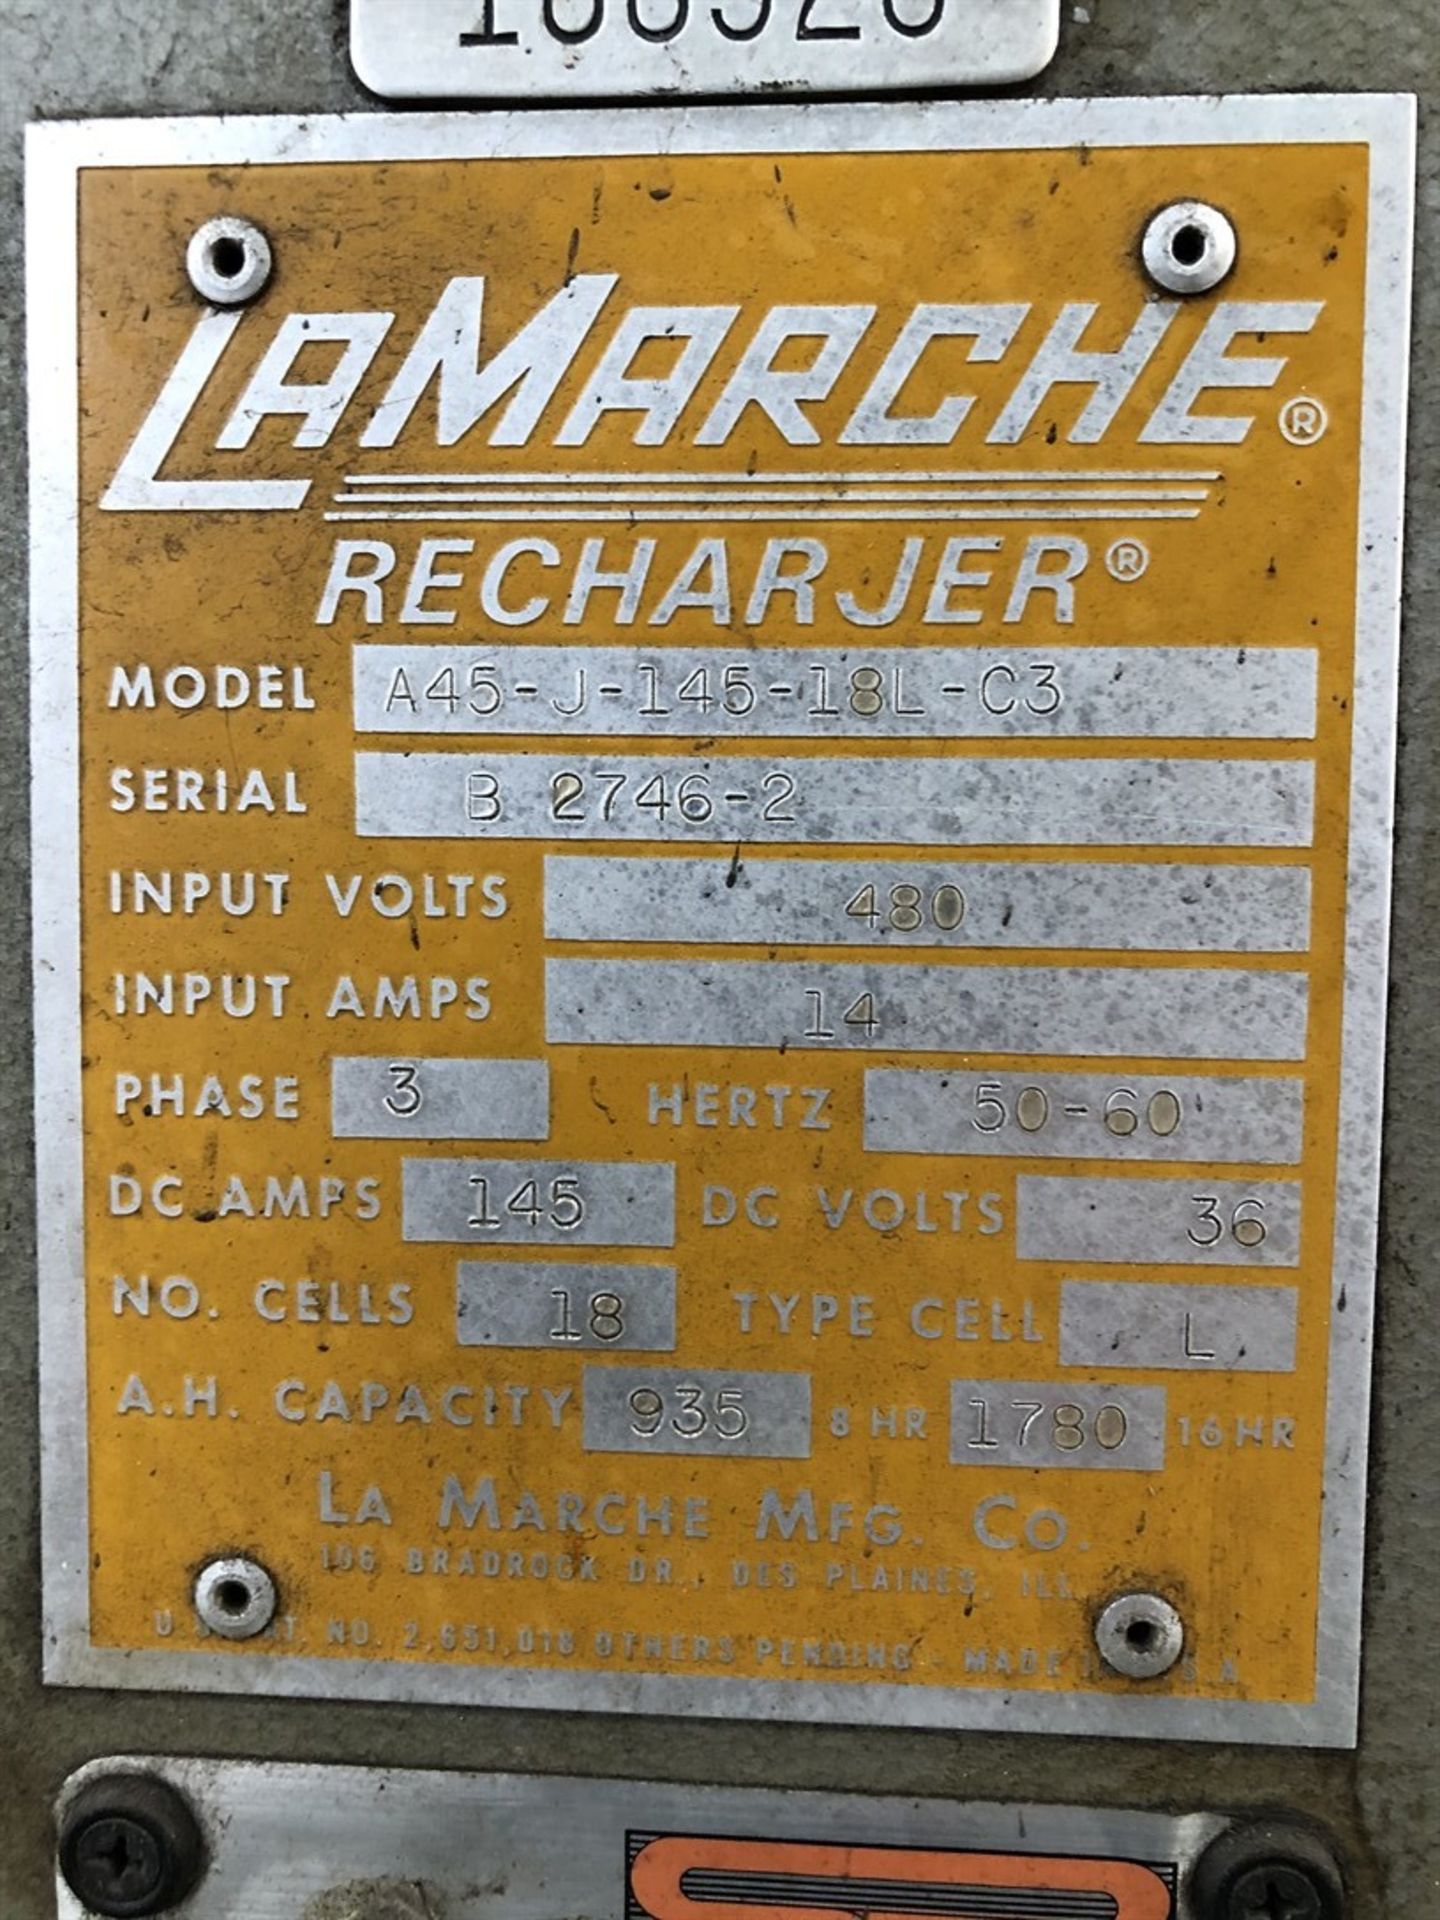 LAMARCHE RECHARJER A45-J-145-18L-C3, L Type Battery Charger, s/n B2746-2, (L34 MSB) - Image 2 of 2